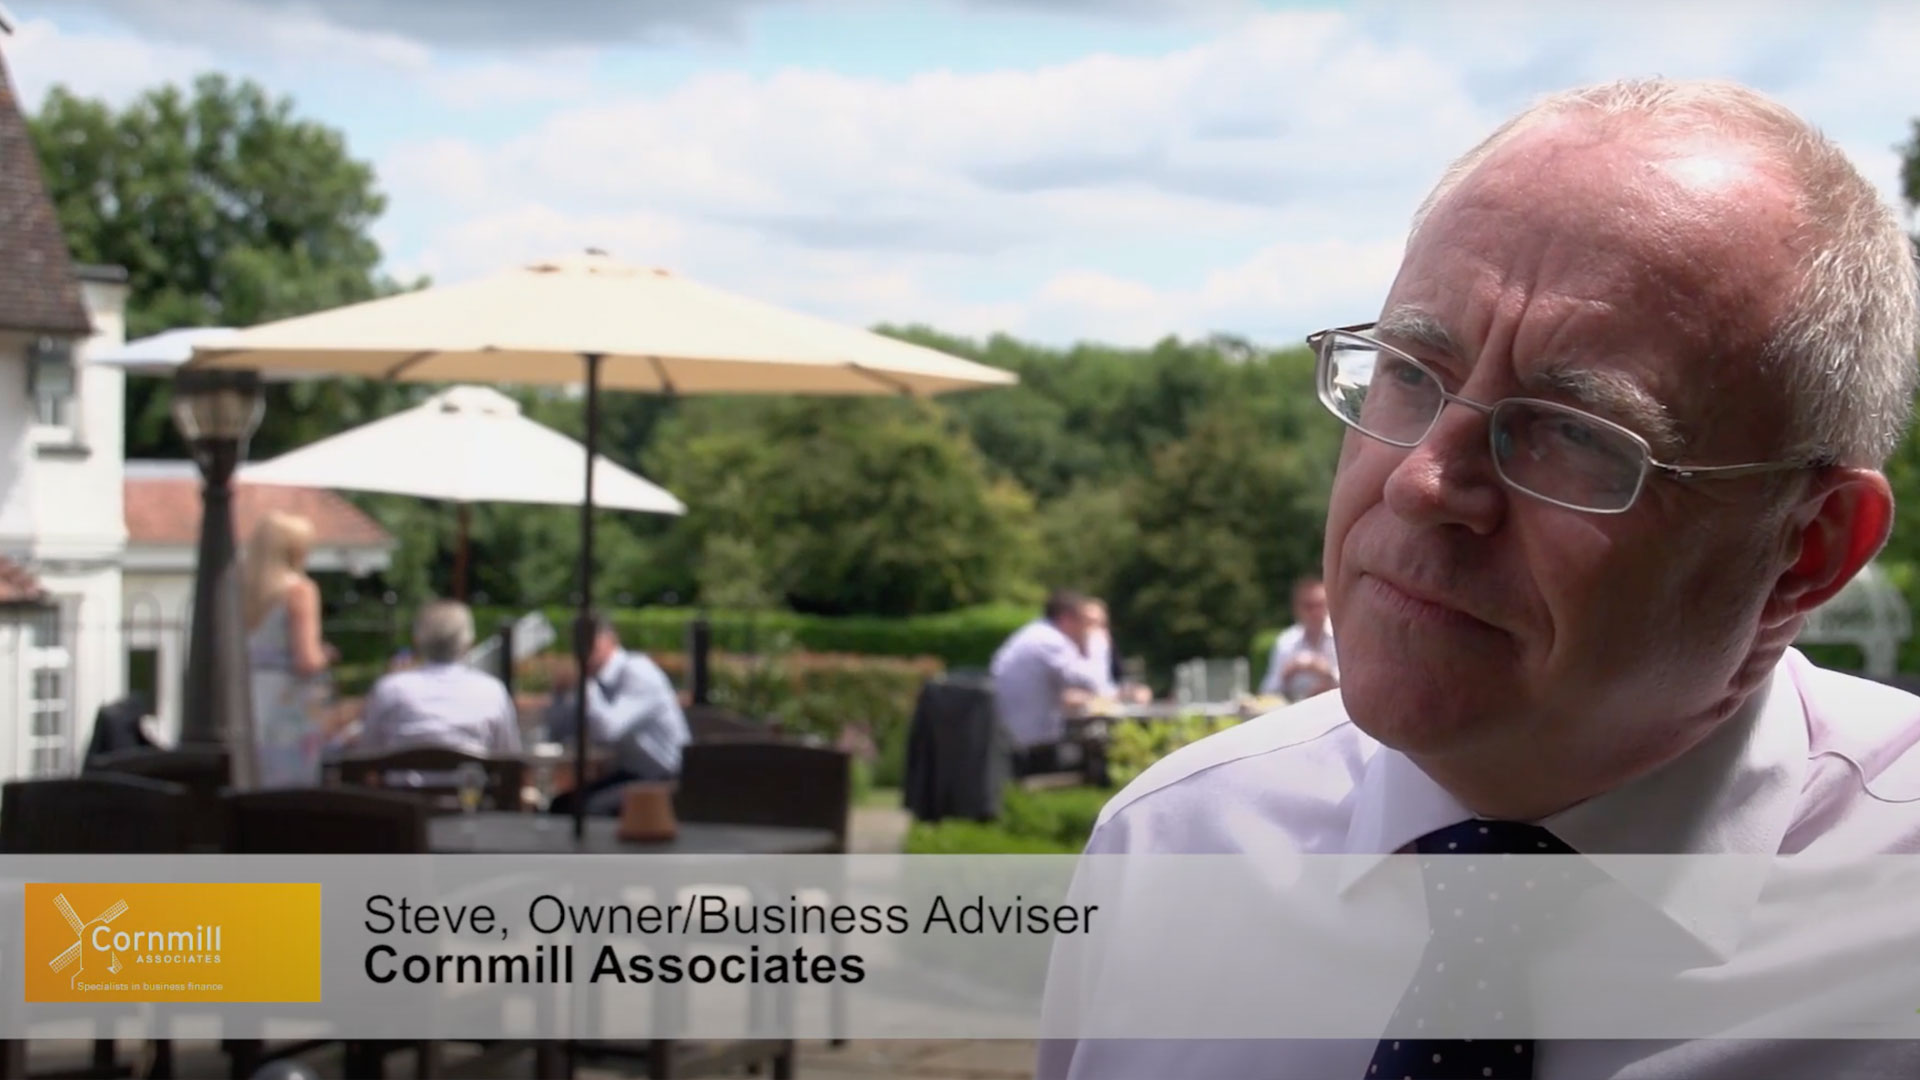 Testimonials for Accountants in Hertfordshire Cornmill Associates